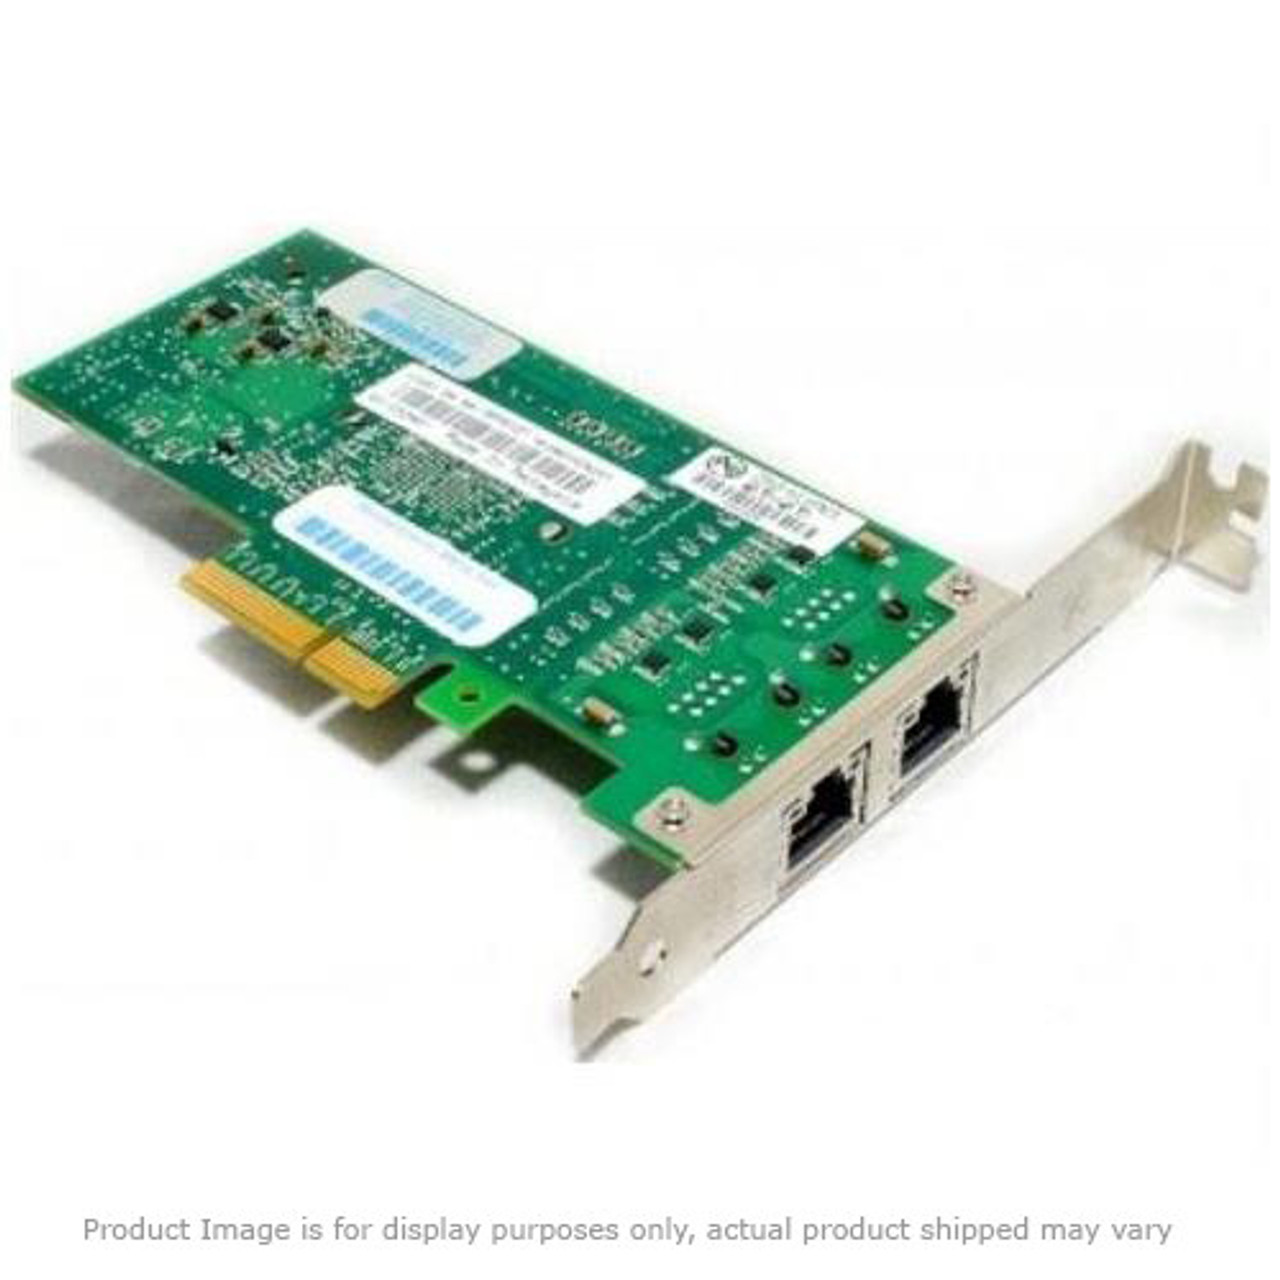 XSPFC401EU Fujitsu PCI-X Enterprise 4Gb FC Host Bus Adapter Emulex RoHS-6 Compliant